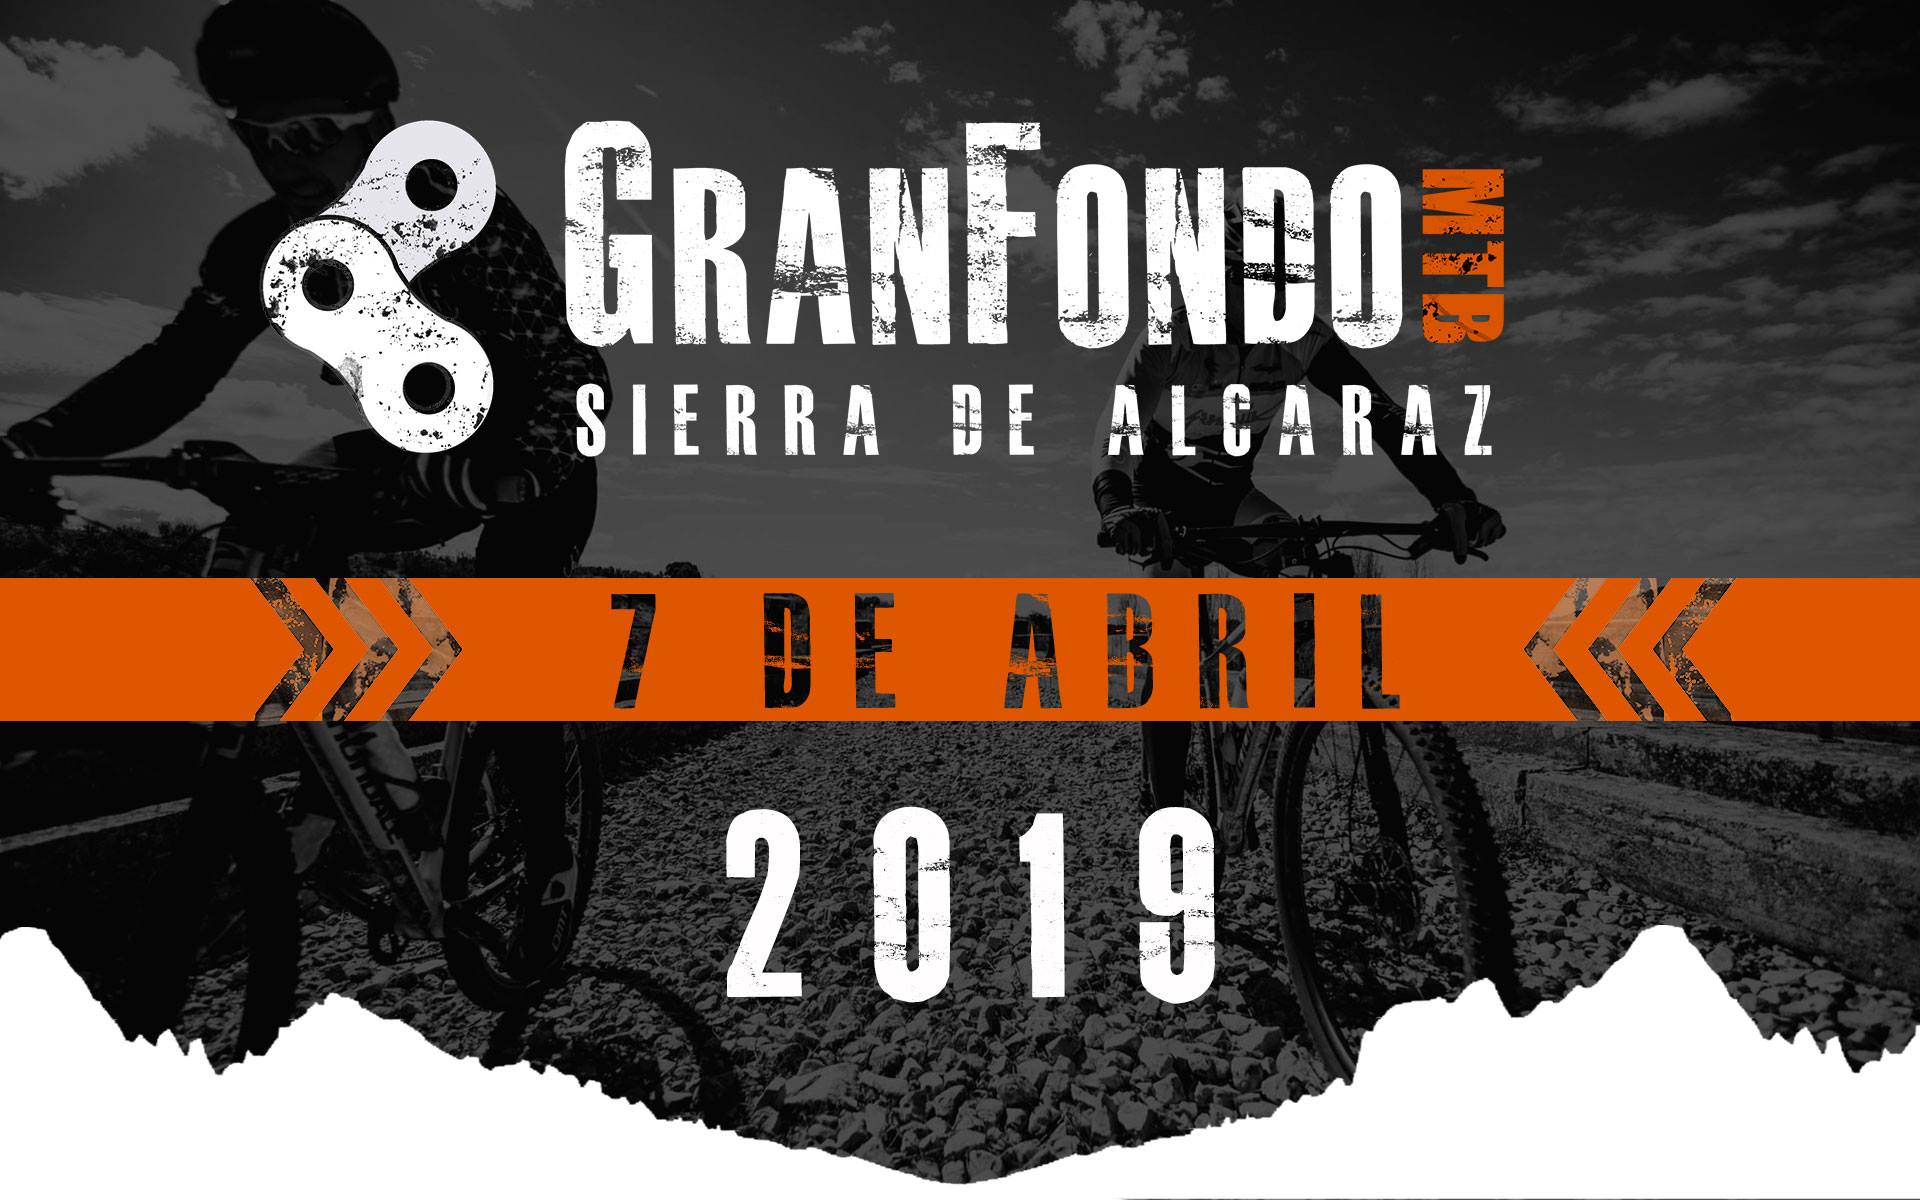 GRAN FONDO SIERRA DE ALCARAZ 2019 (ALBACETE)